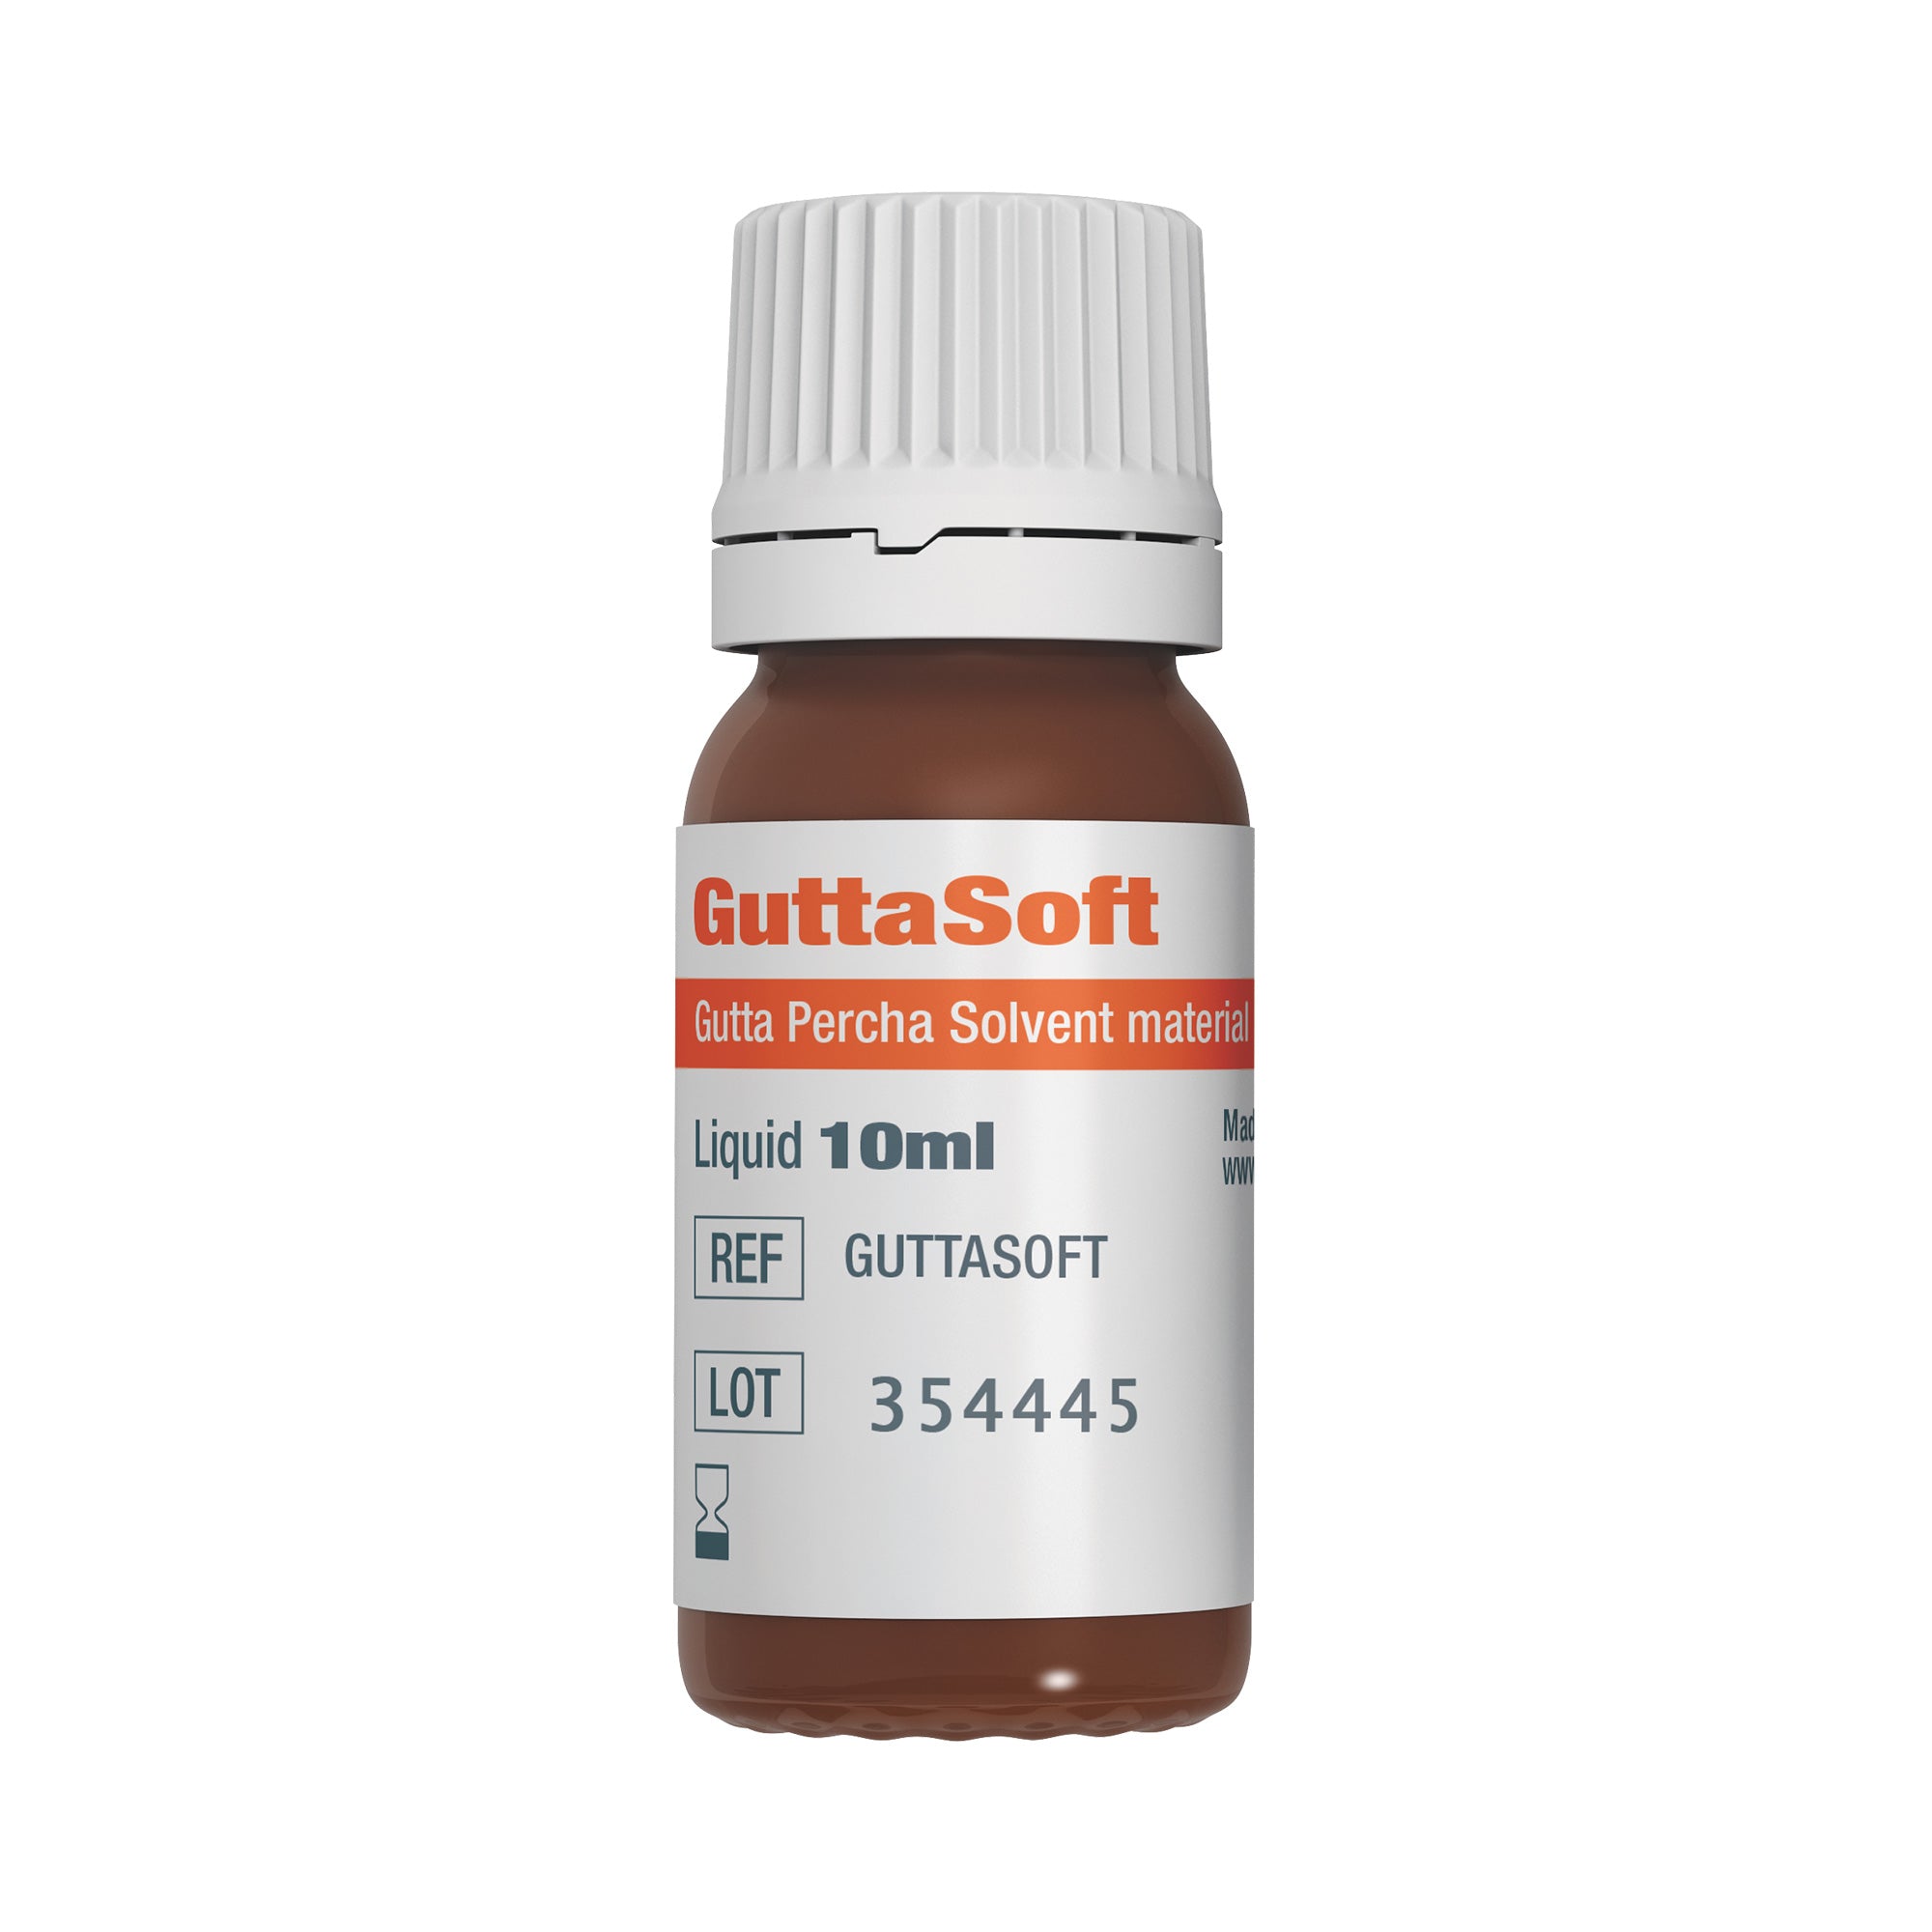 DSI GuttaSoft Gutta Percha Solvent Material 10ml 0.33oz